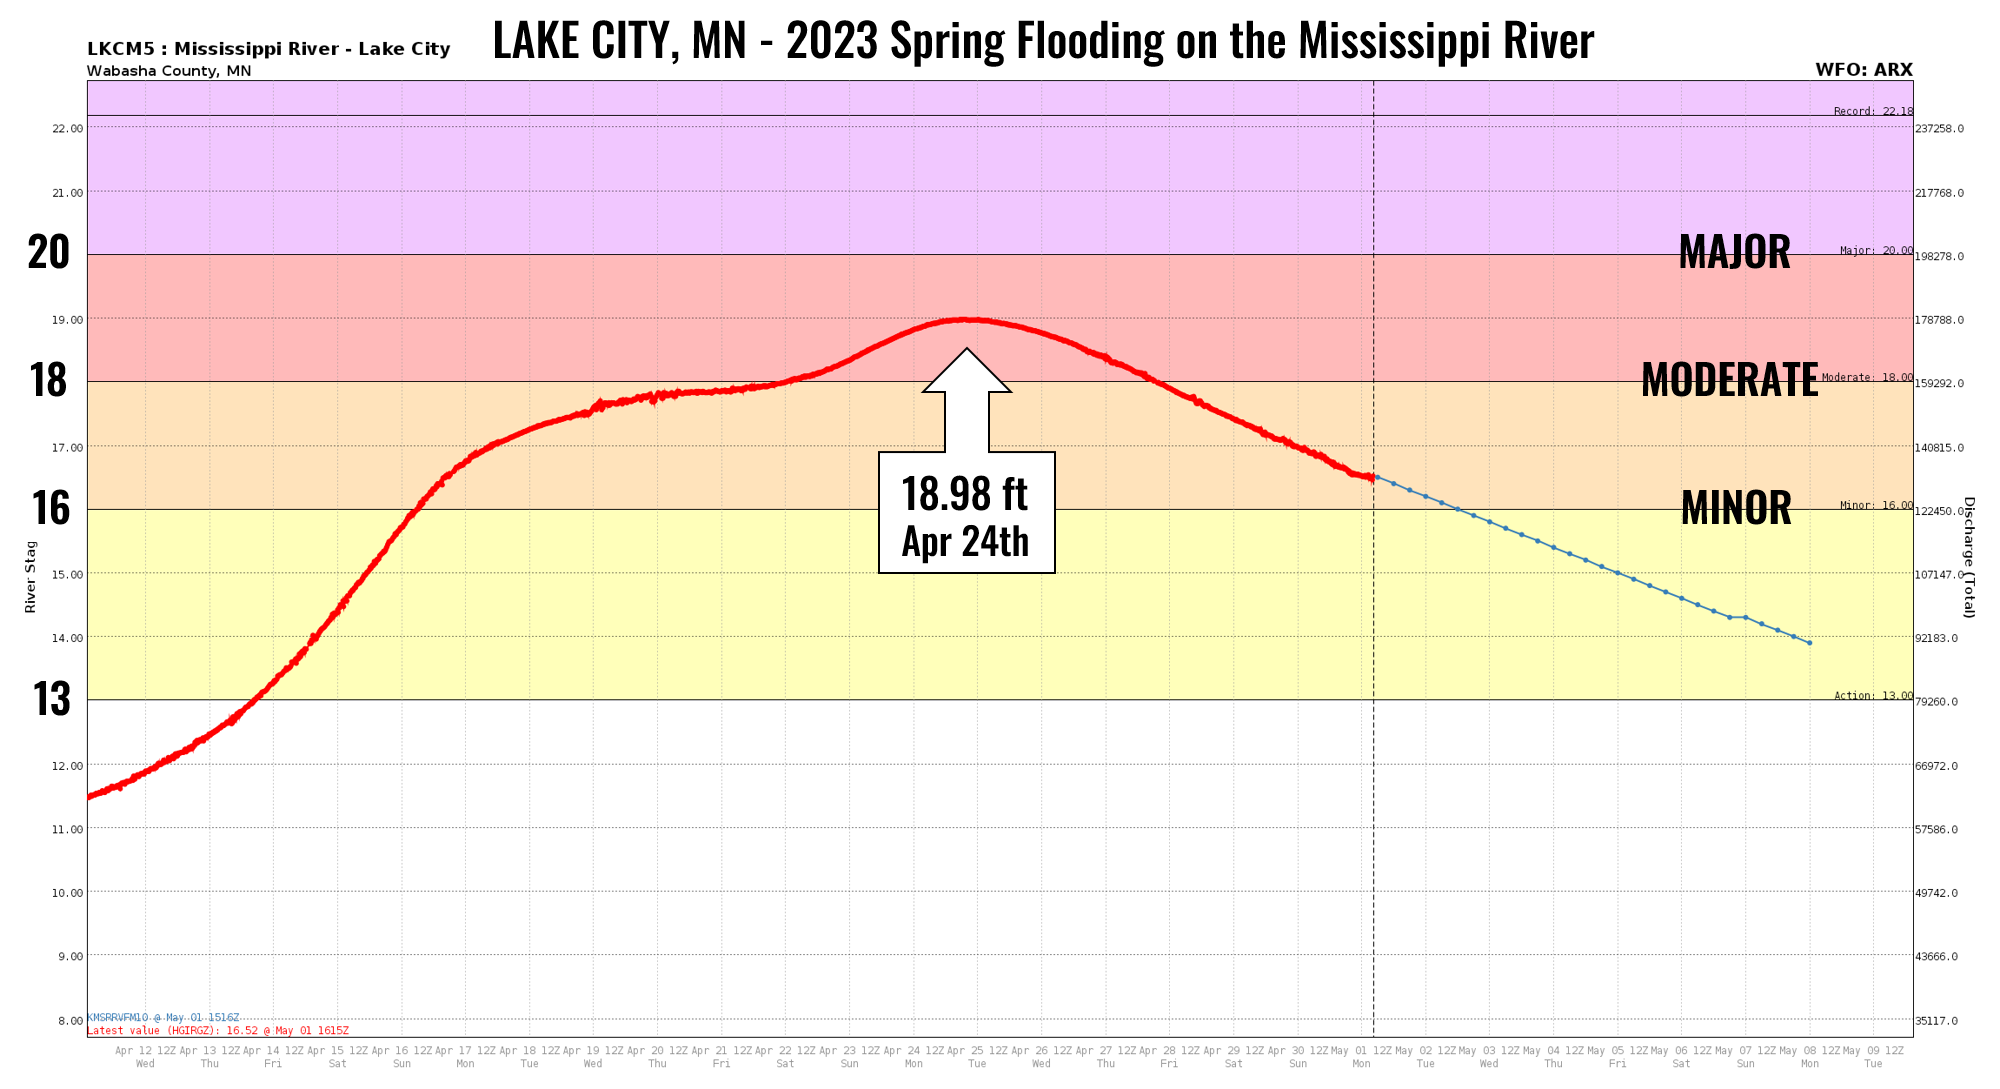 Lake City hydrograph 2023 flooding